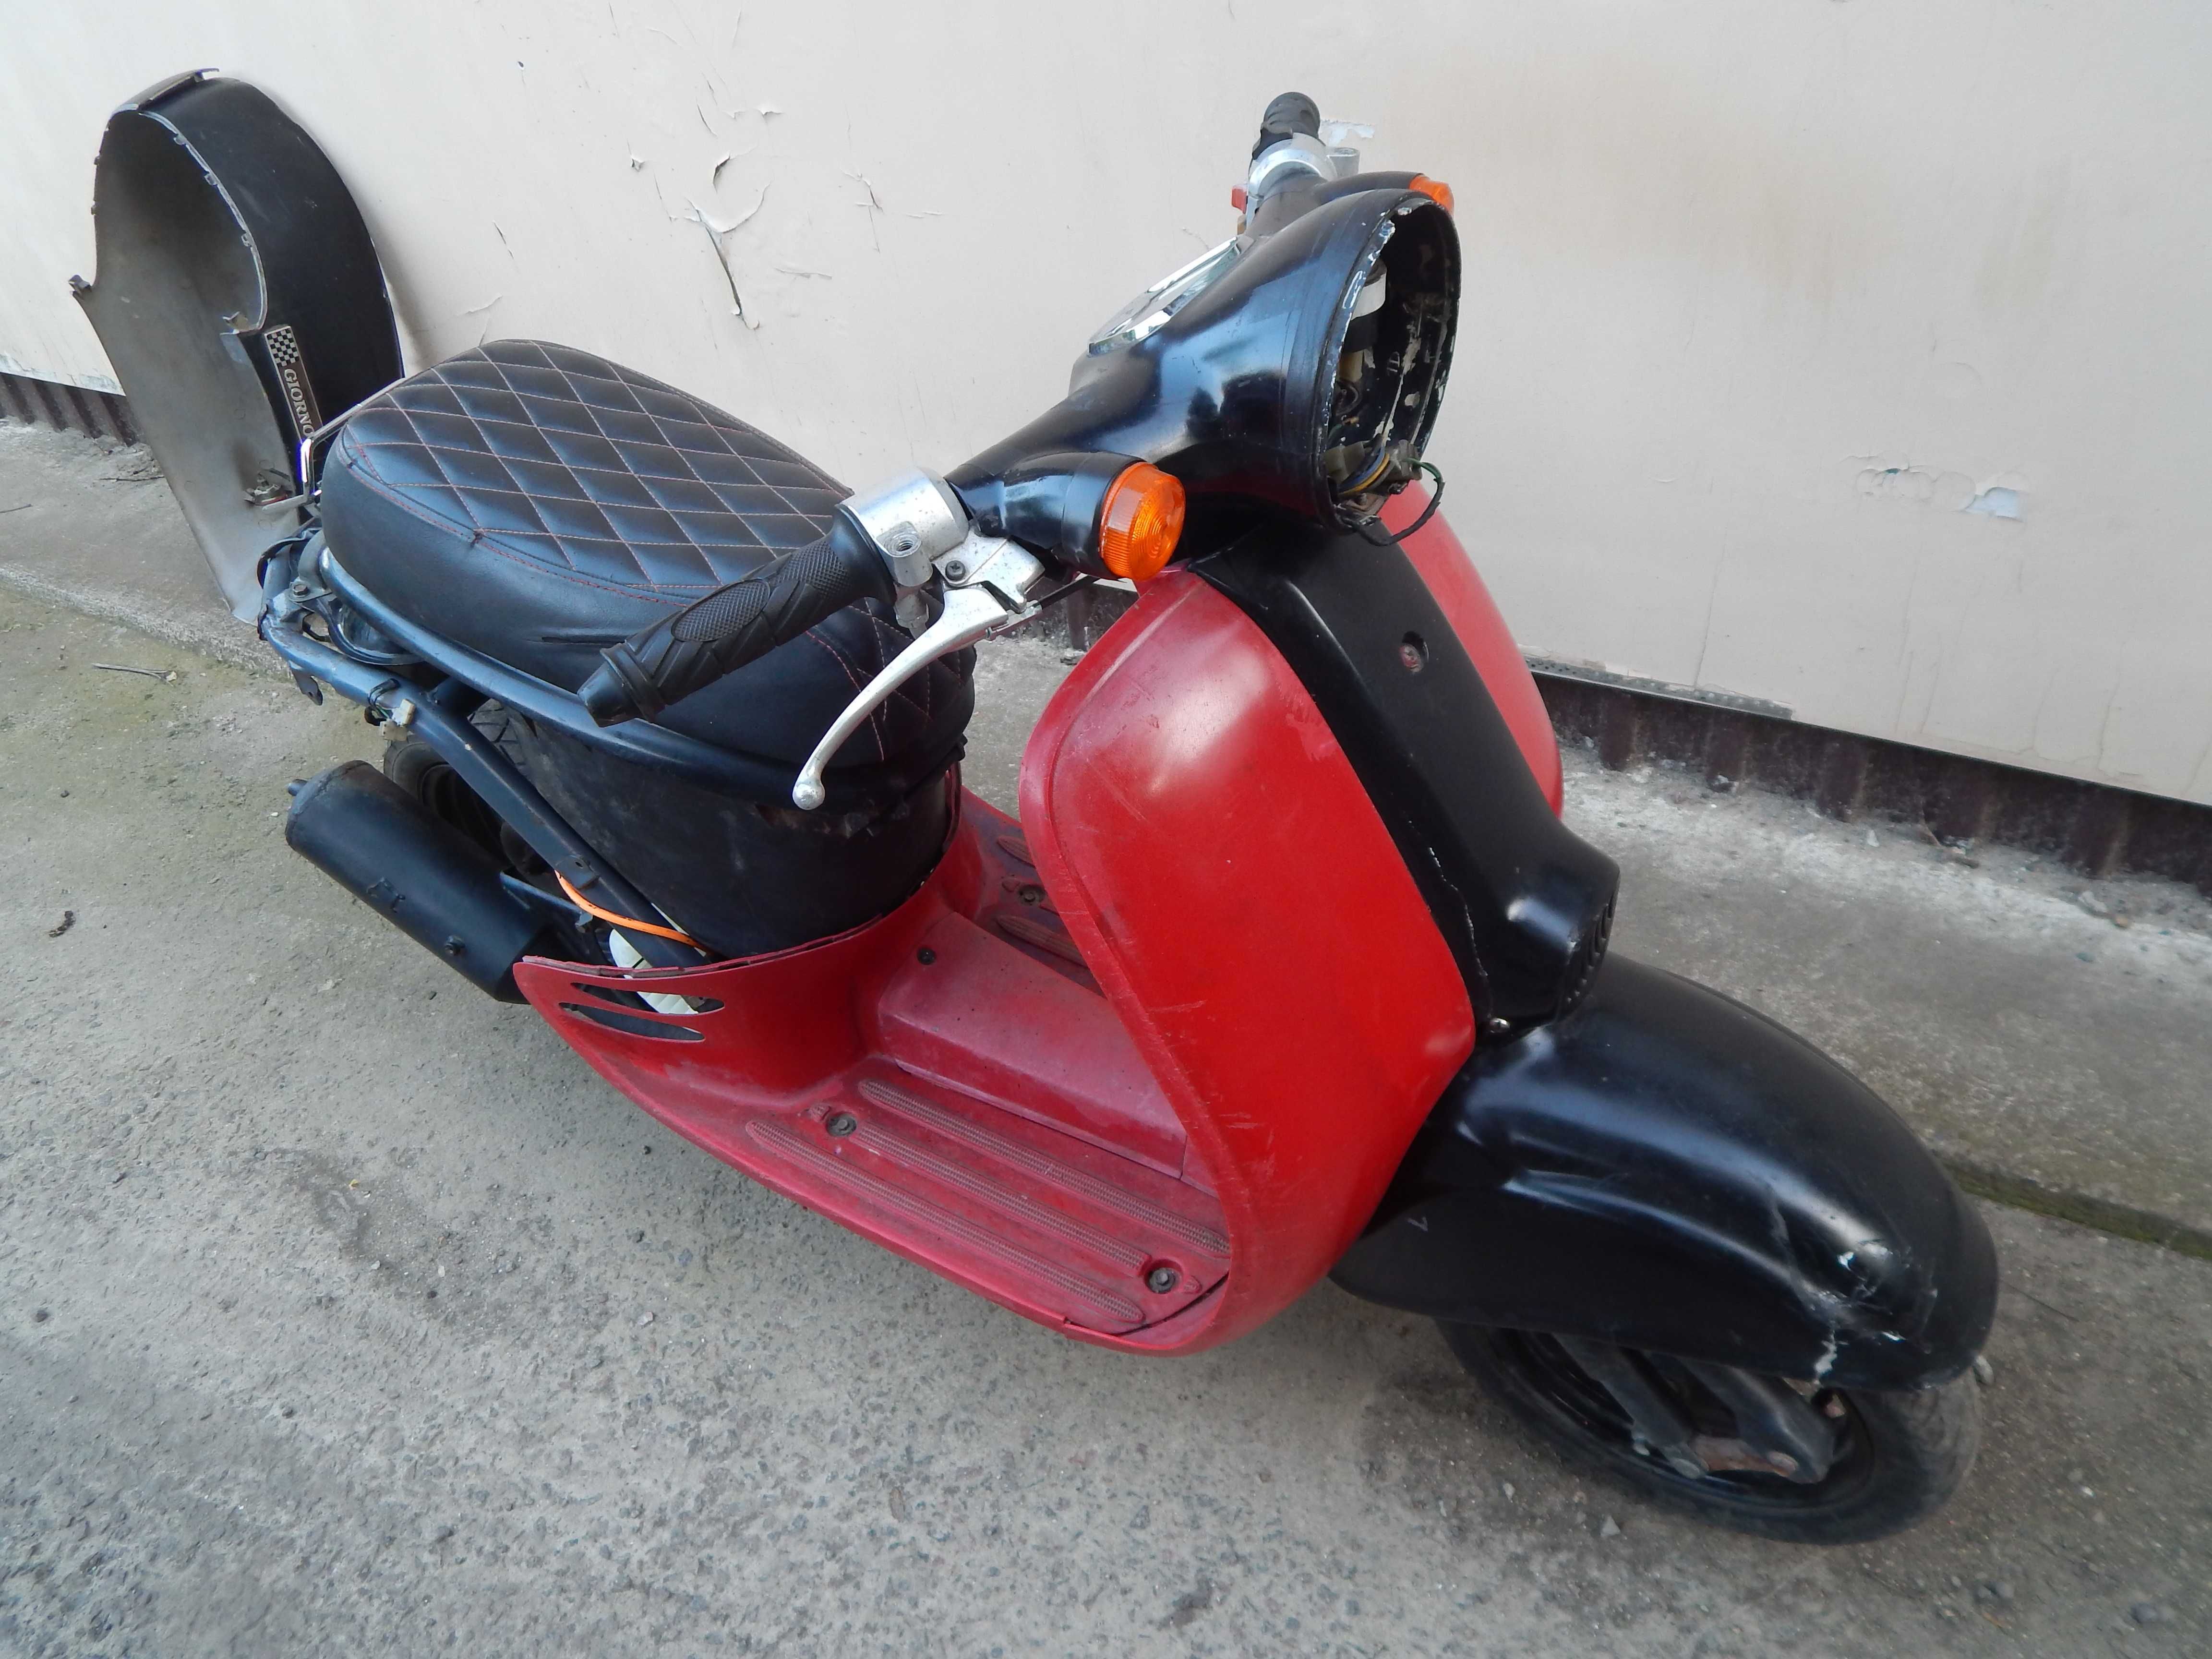 Мопед, ретро скутер Honda Giorno 2Т под доработку, требуется ремонт